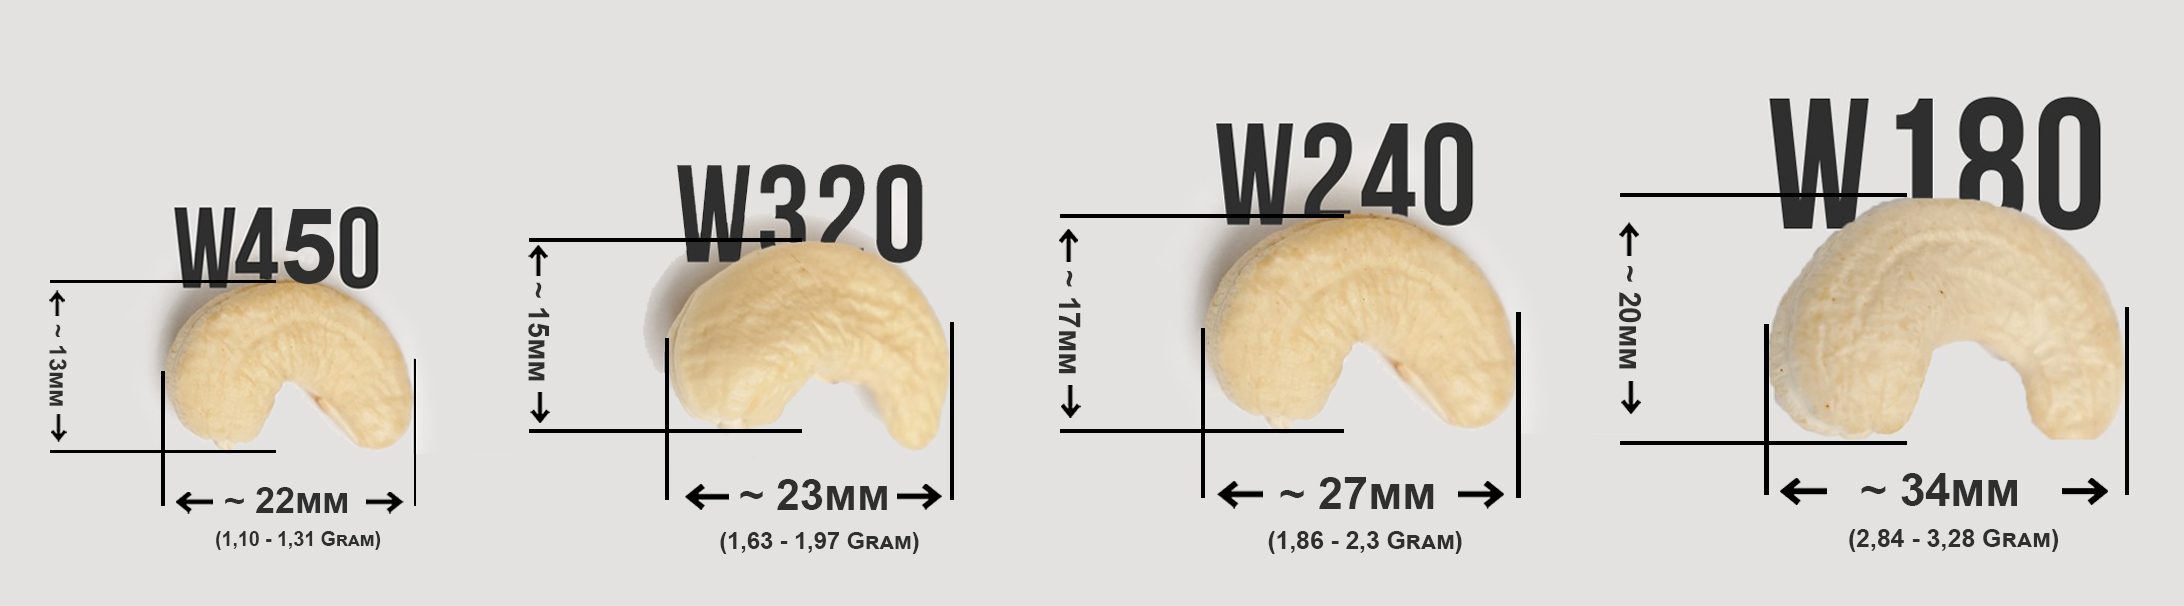 Compare with similar Vietnam Cashew Grade: W180, W240, W320, W450...Images Between Types of White Whole Cashew Kernels: WW240, WW320, WW450 - Cashew Standards Grades & Forms